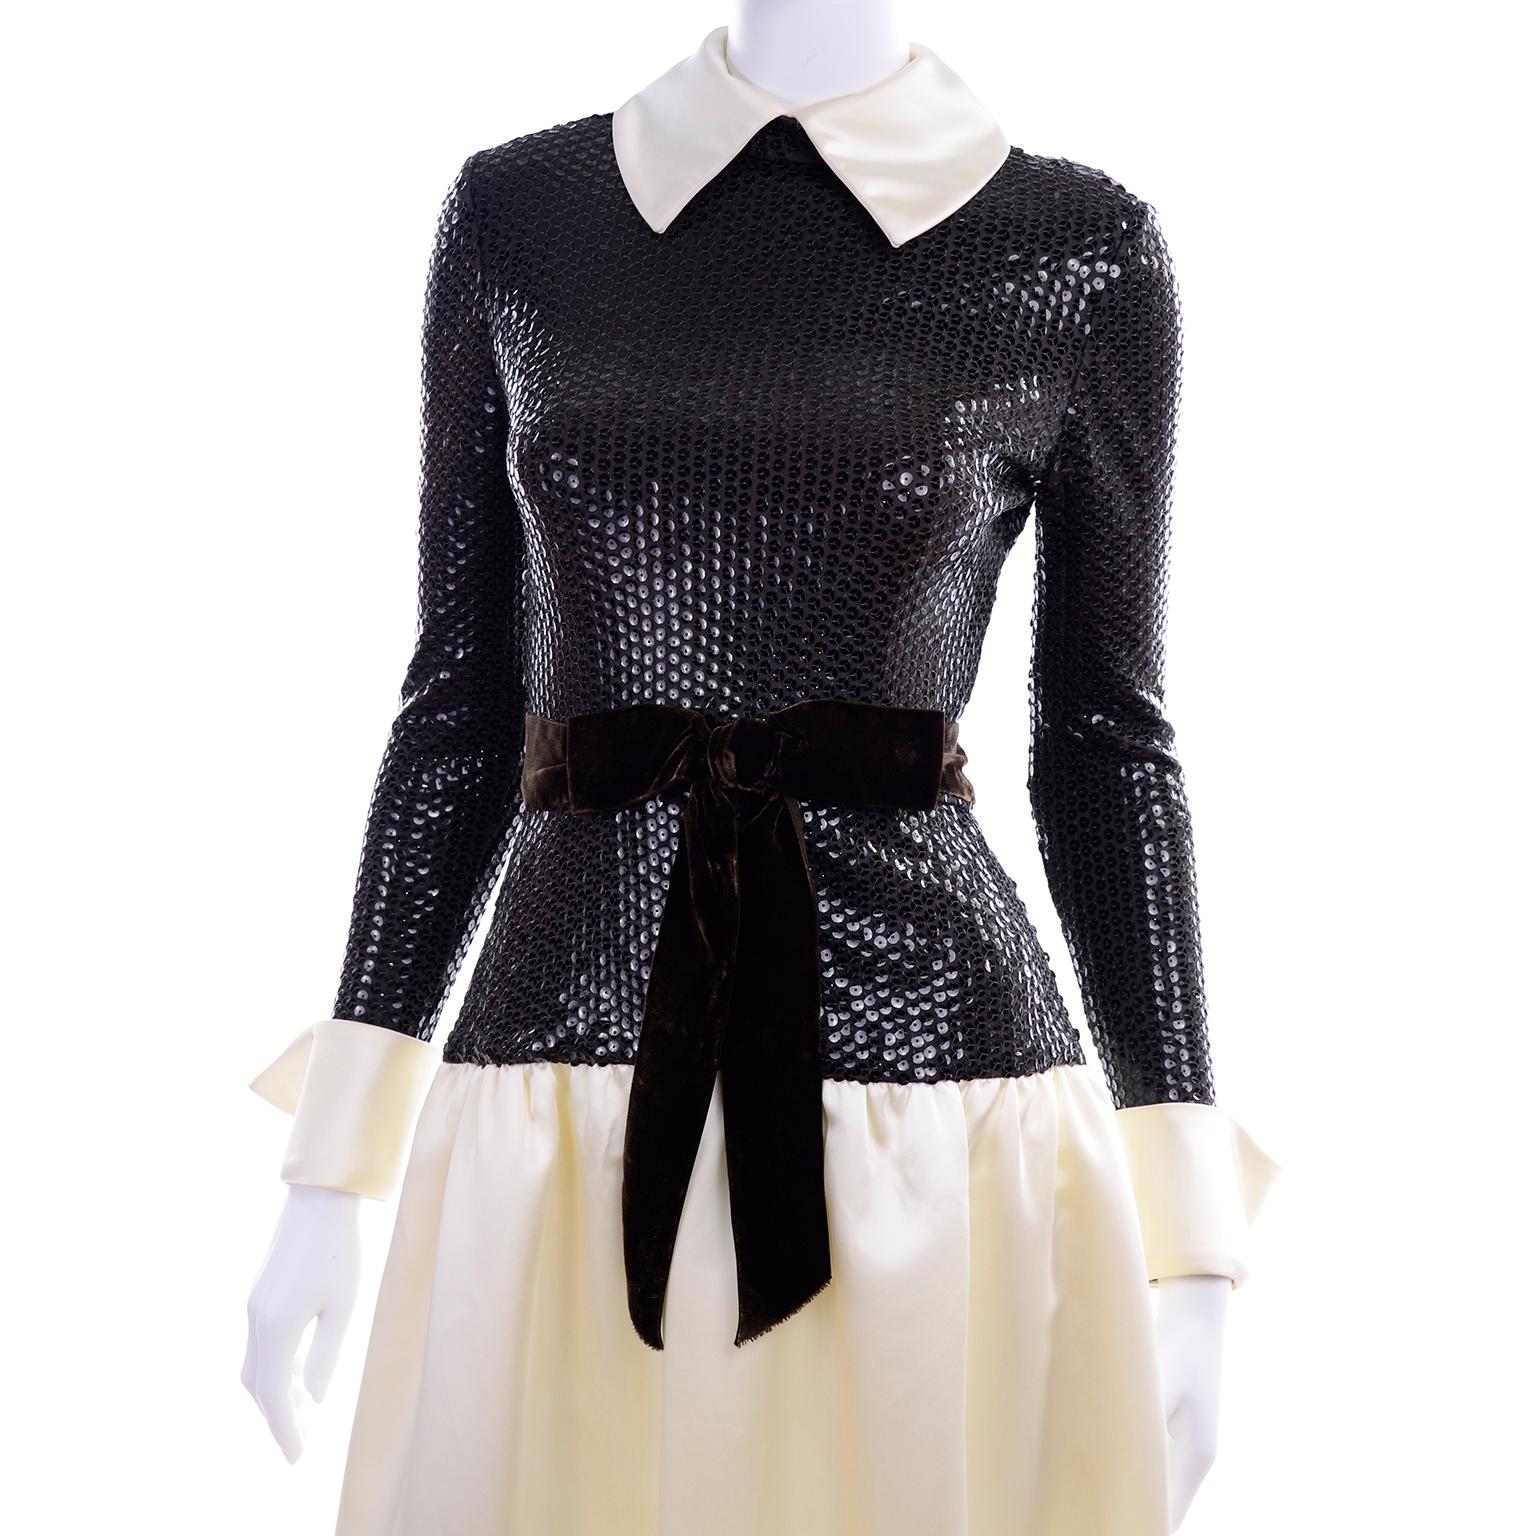 Kiki Hart Vintage Evening Dress Ivory Satin W Brown Sequin Bodice & Velvet Bow For Sale 6